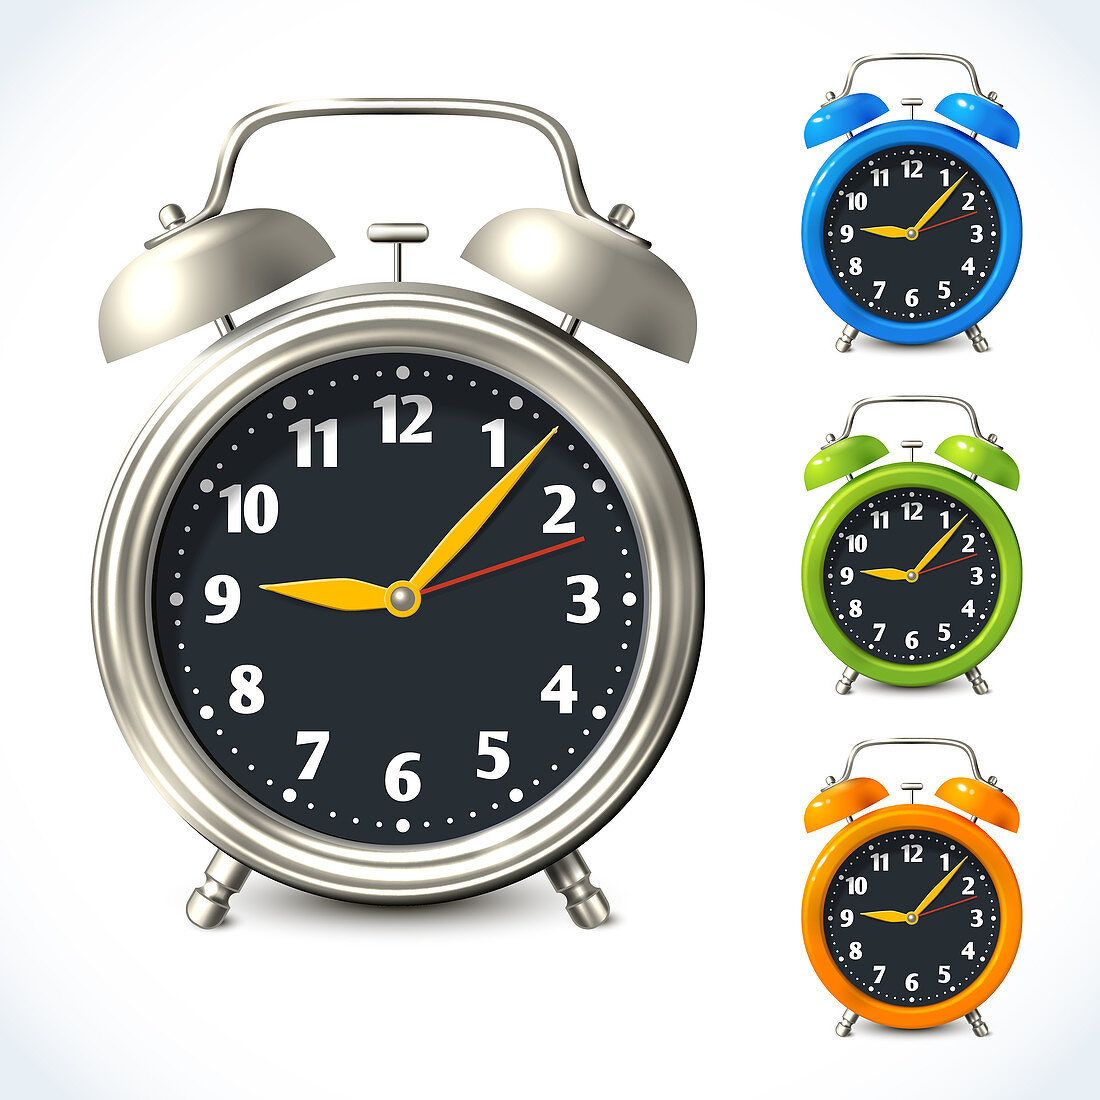 Alarm clocks, illustration